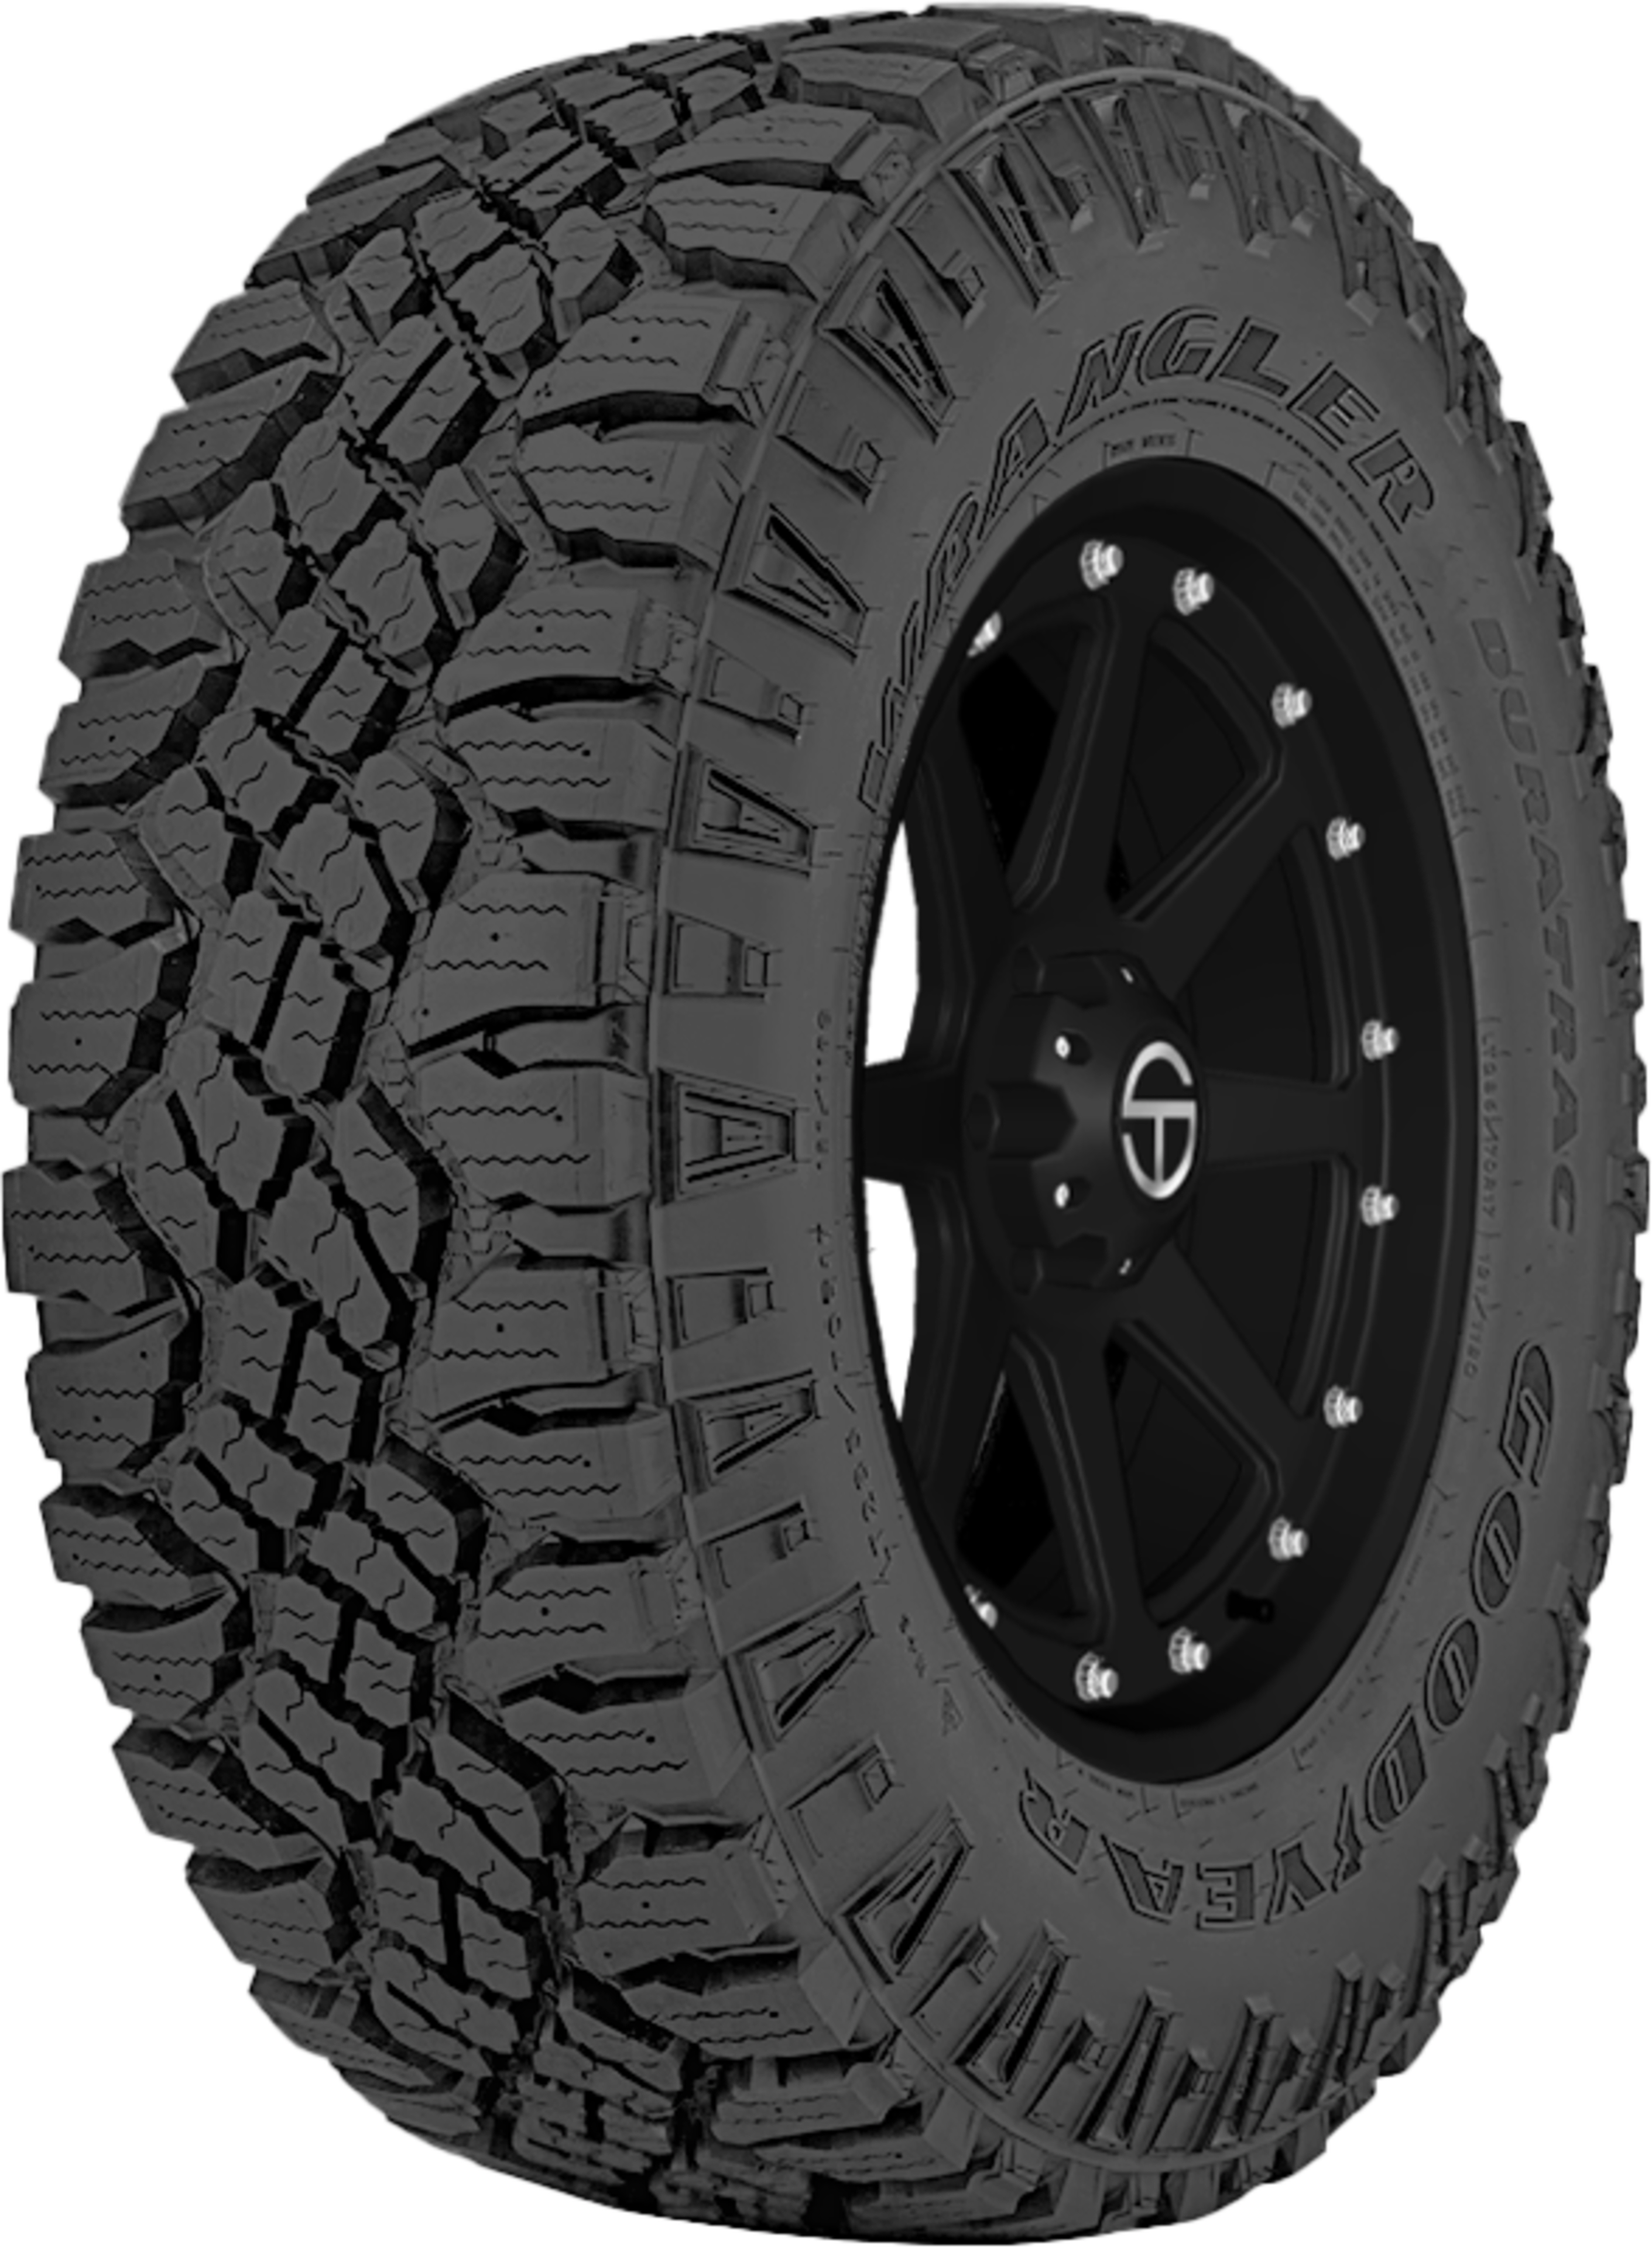 Buy Goodyear Wrangler DuraTrac Tires Online | SimpleTire